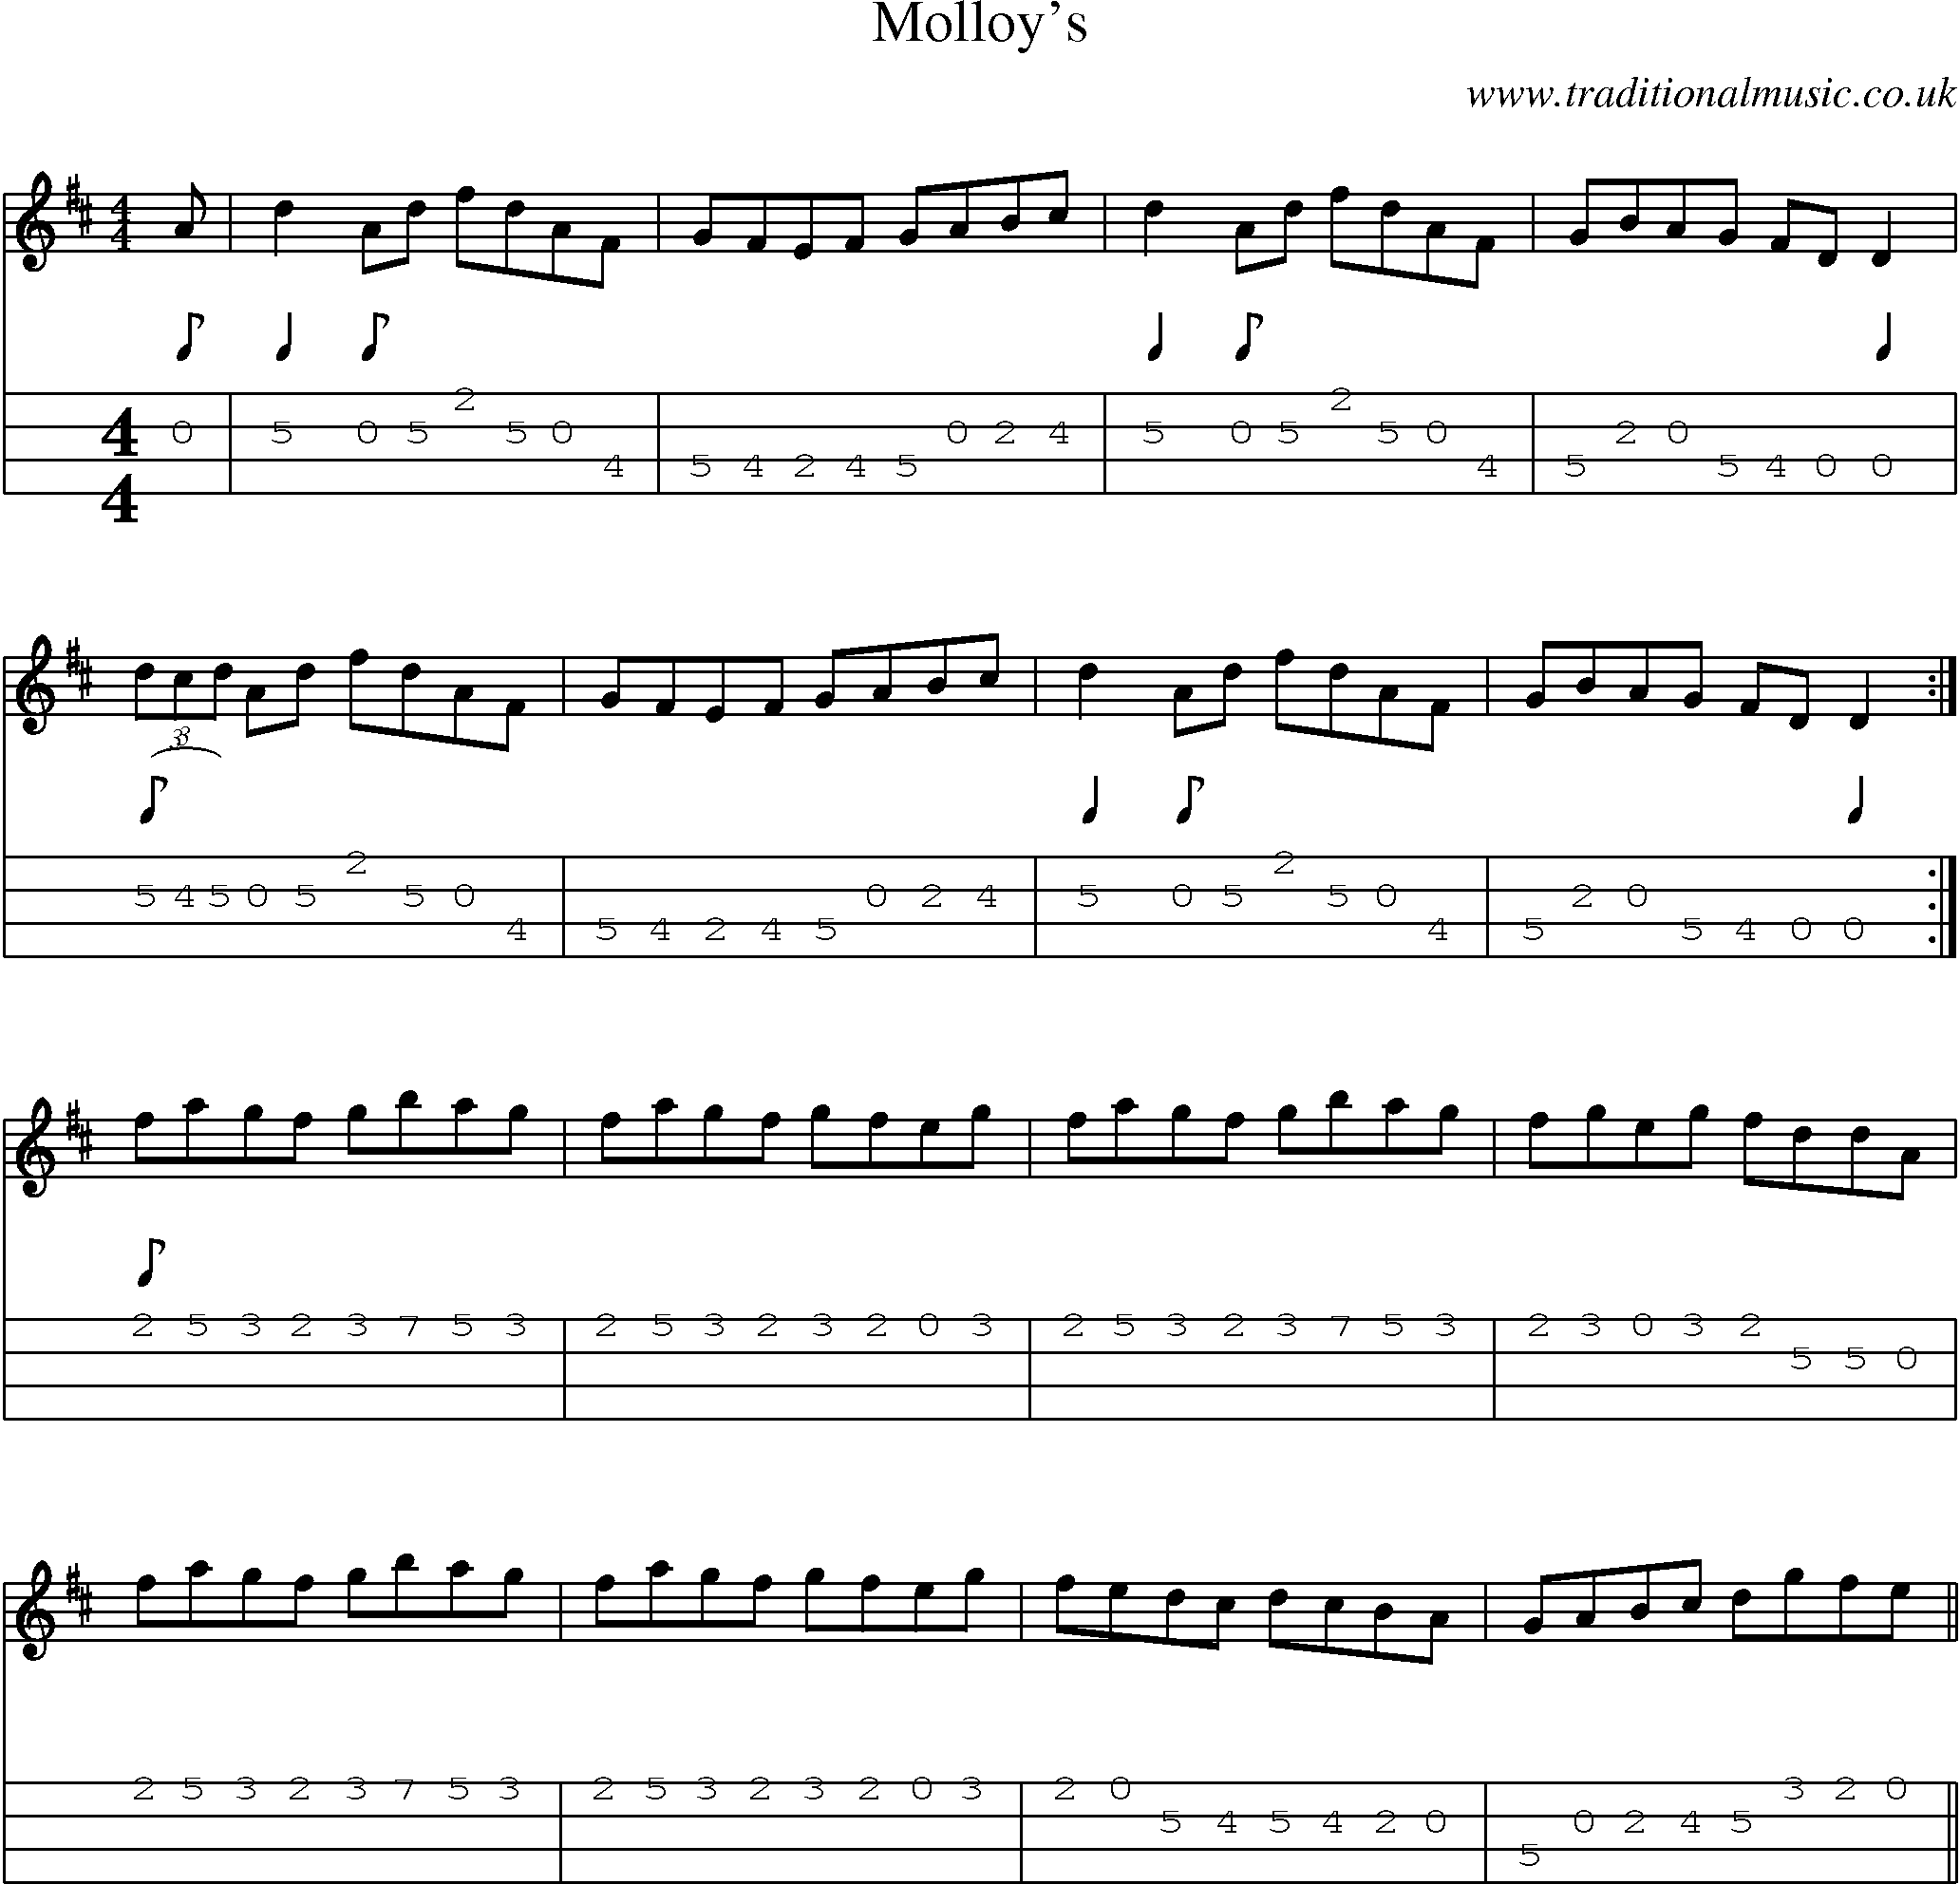 Music Score and Mandolin Tabs for Molloys